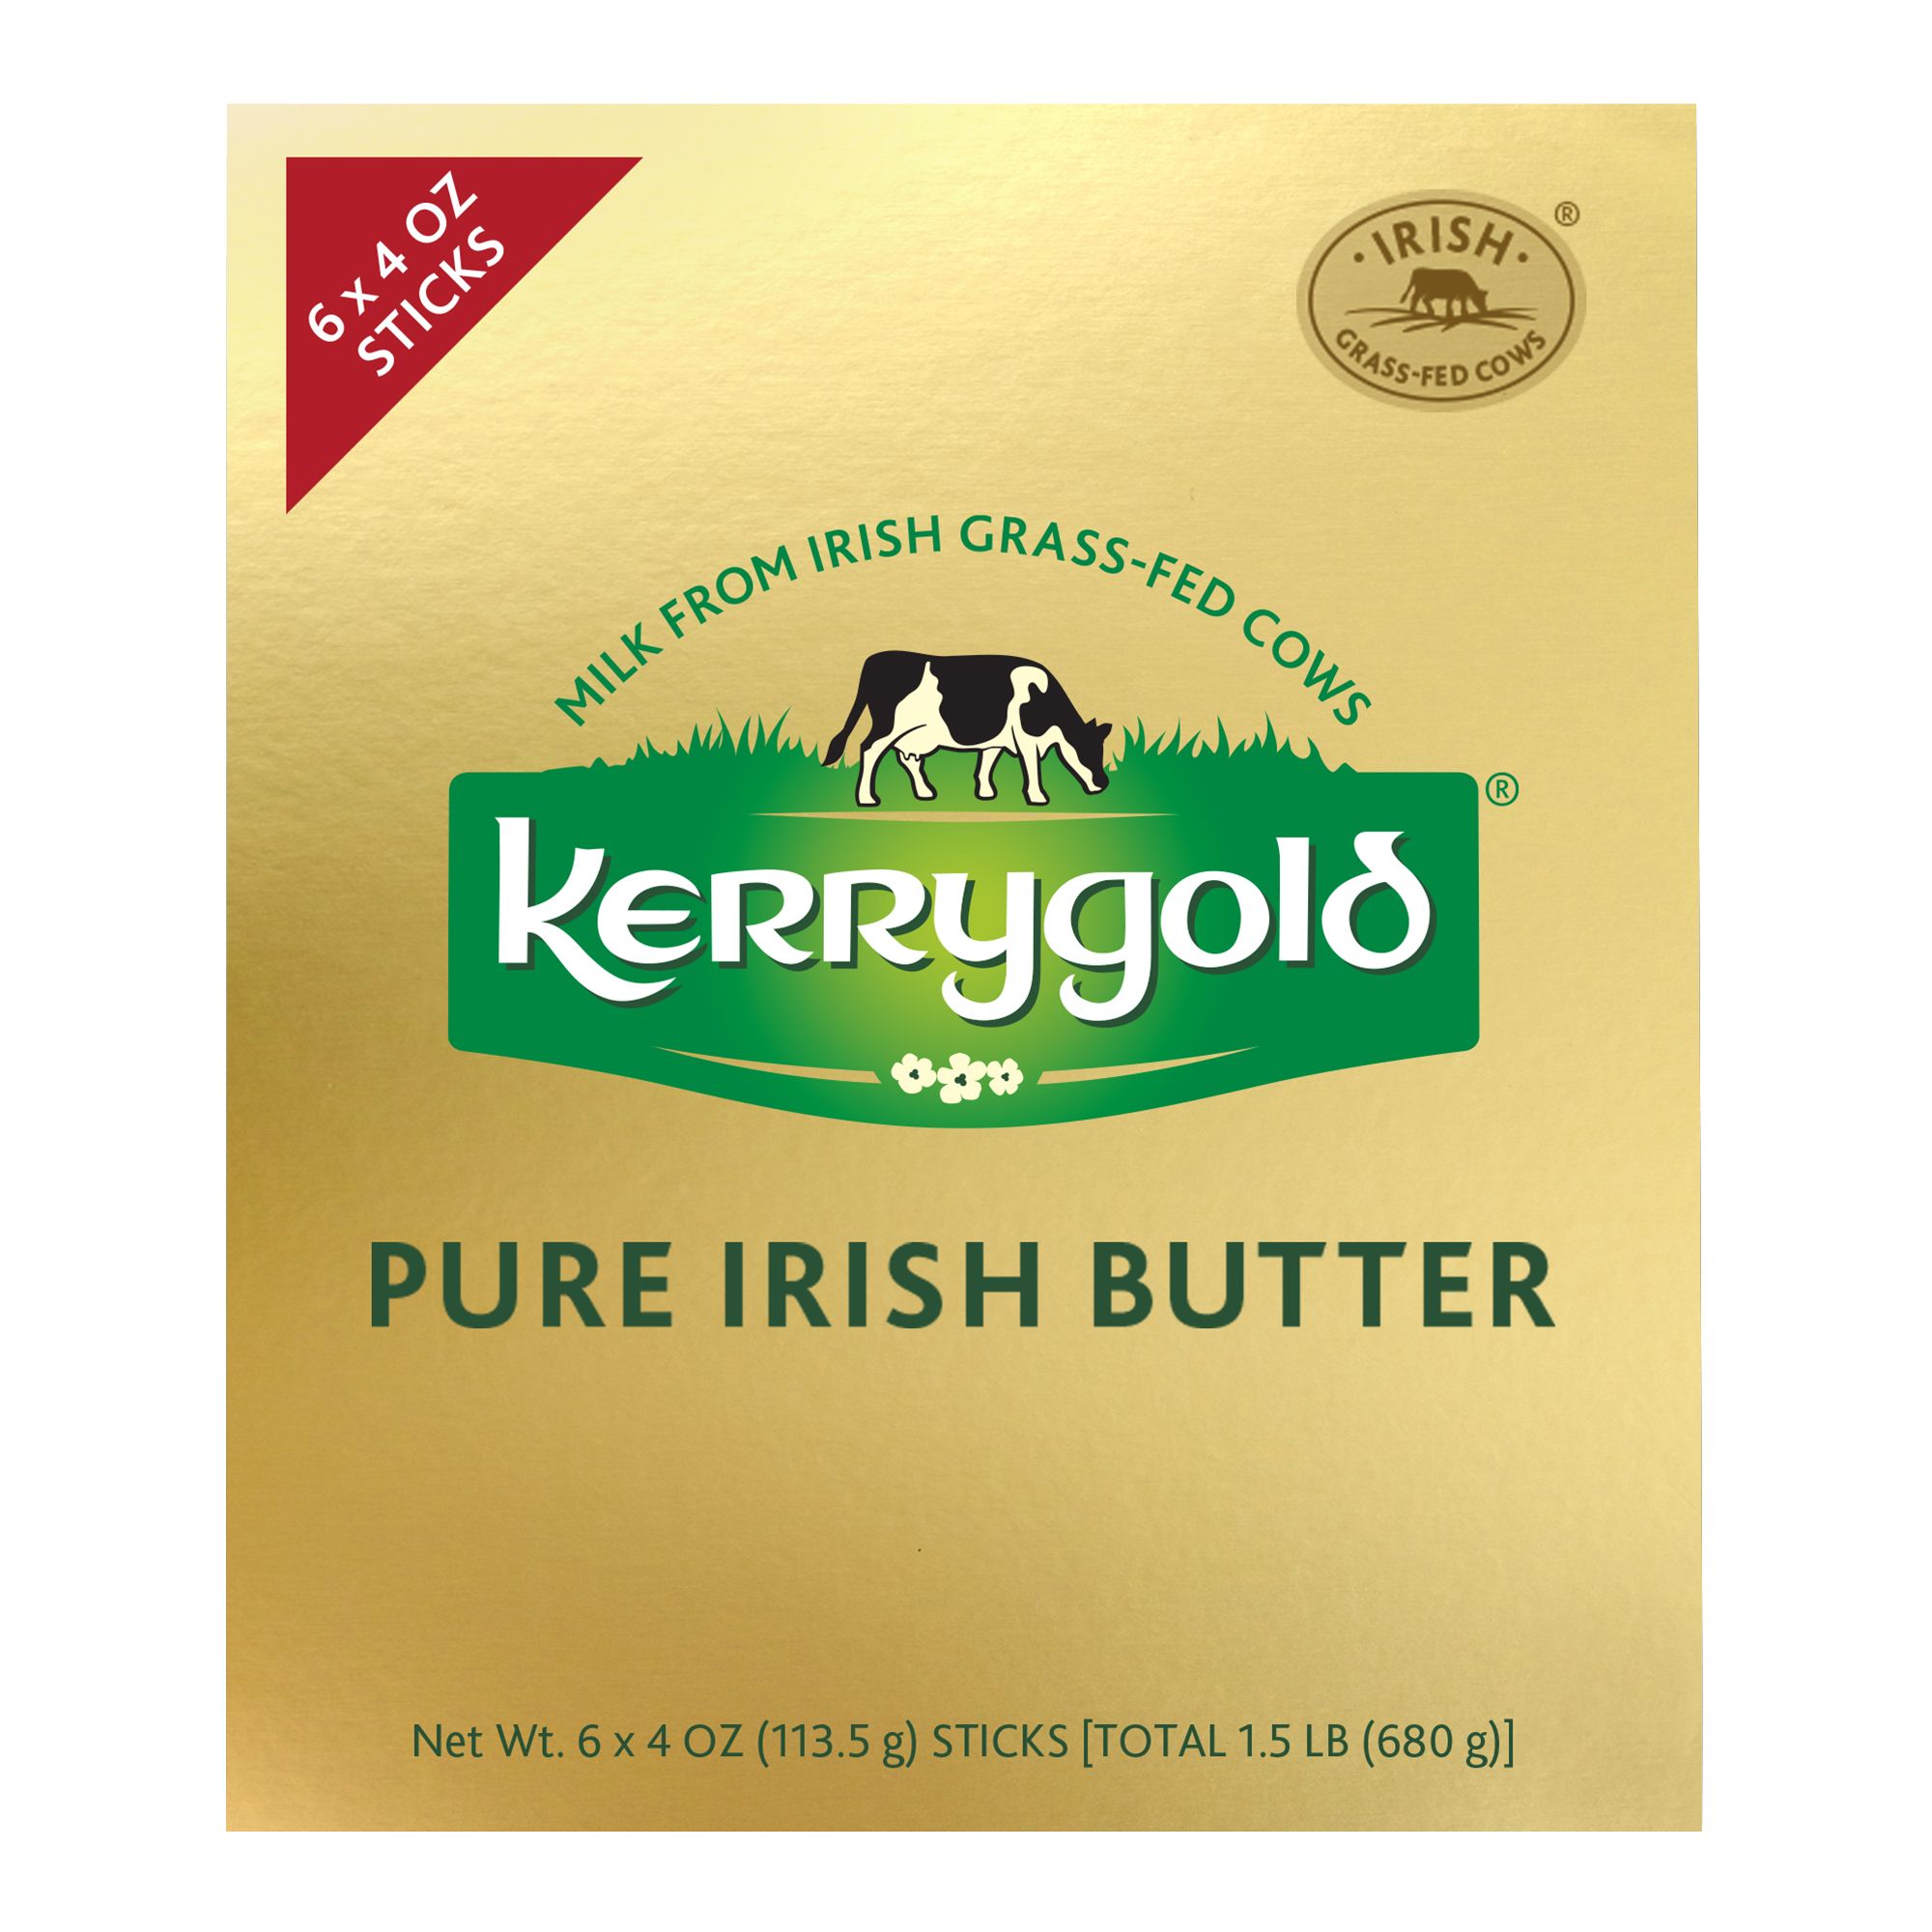 Kerrygold Grass-Fed Salted Pure Irish Butter, 8 oz.